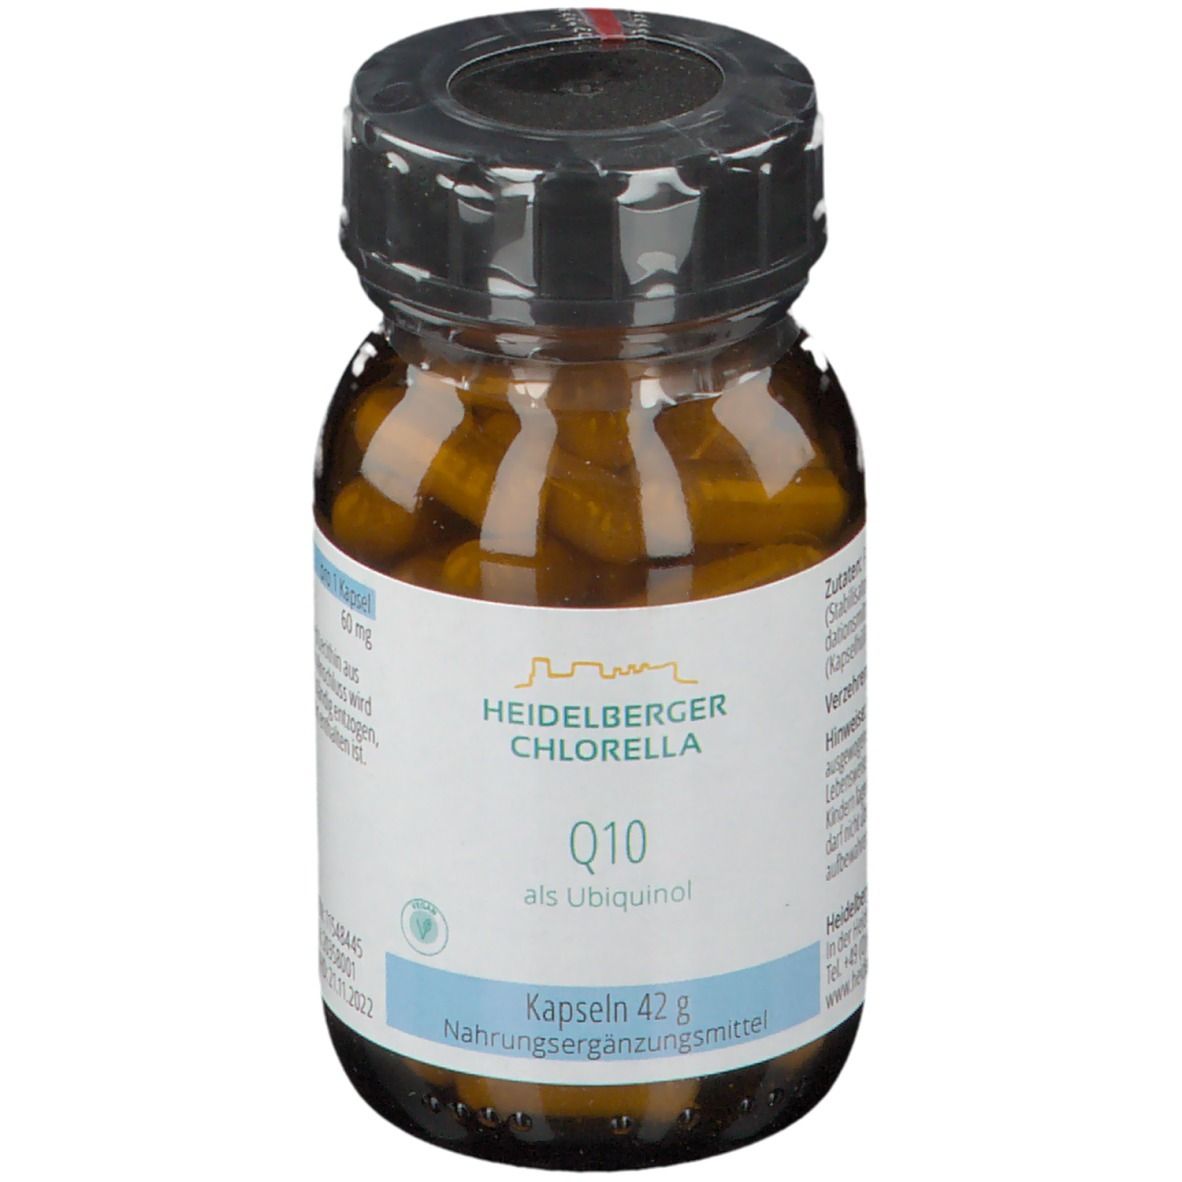 Heidelberger Chlorella® Q10 als UbiquinoL Kapseln